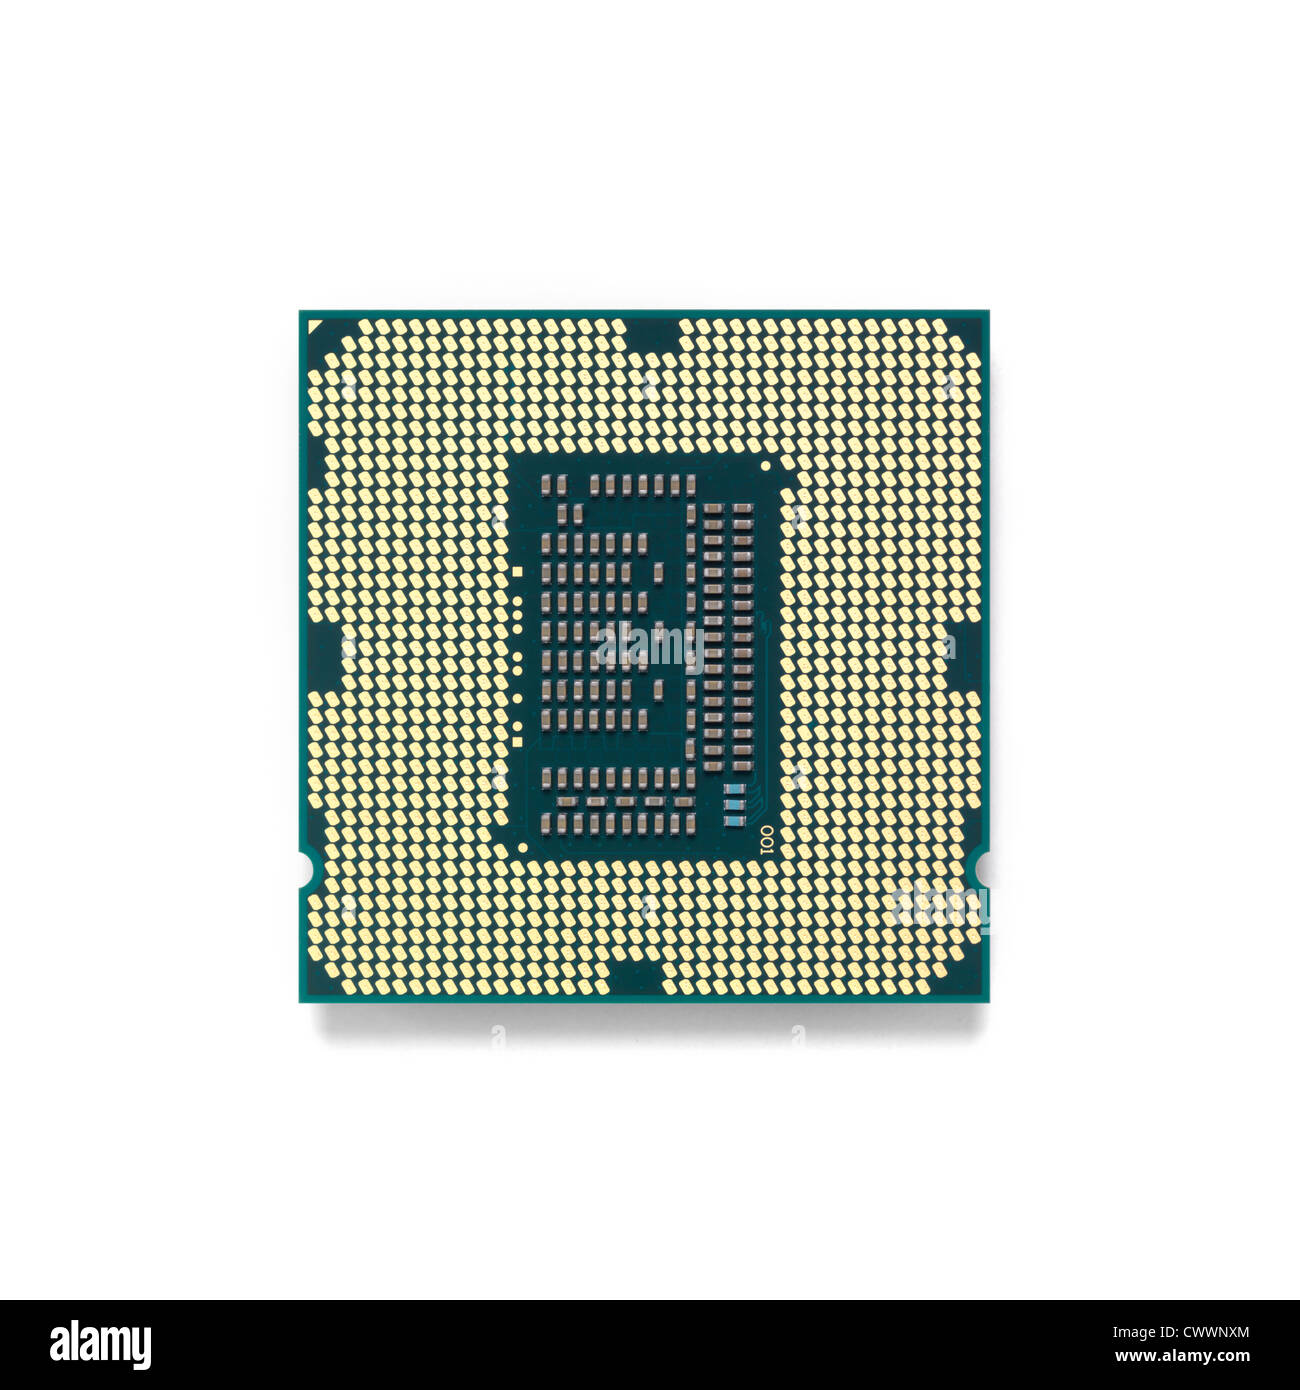 Intel Core i7 3770K processor with LGA 1155 CPU socket isolated on white  background Stock Photo - Alamy